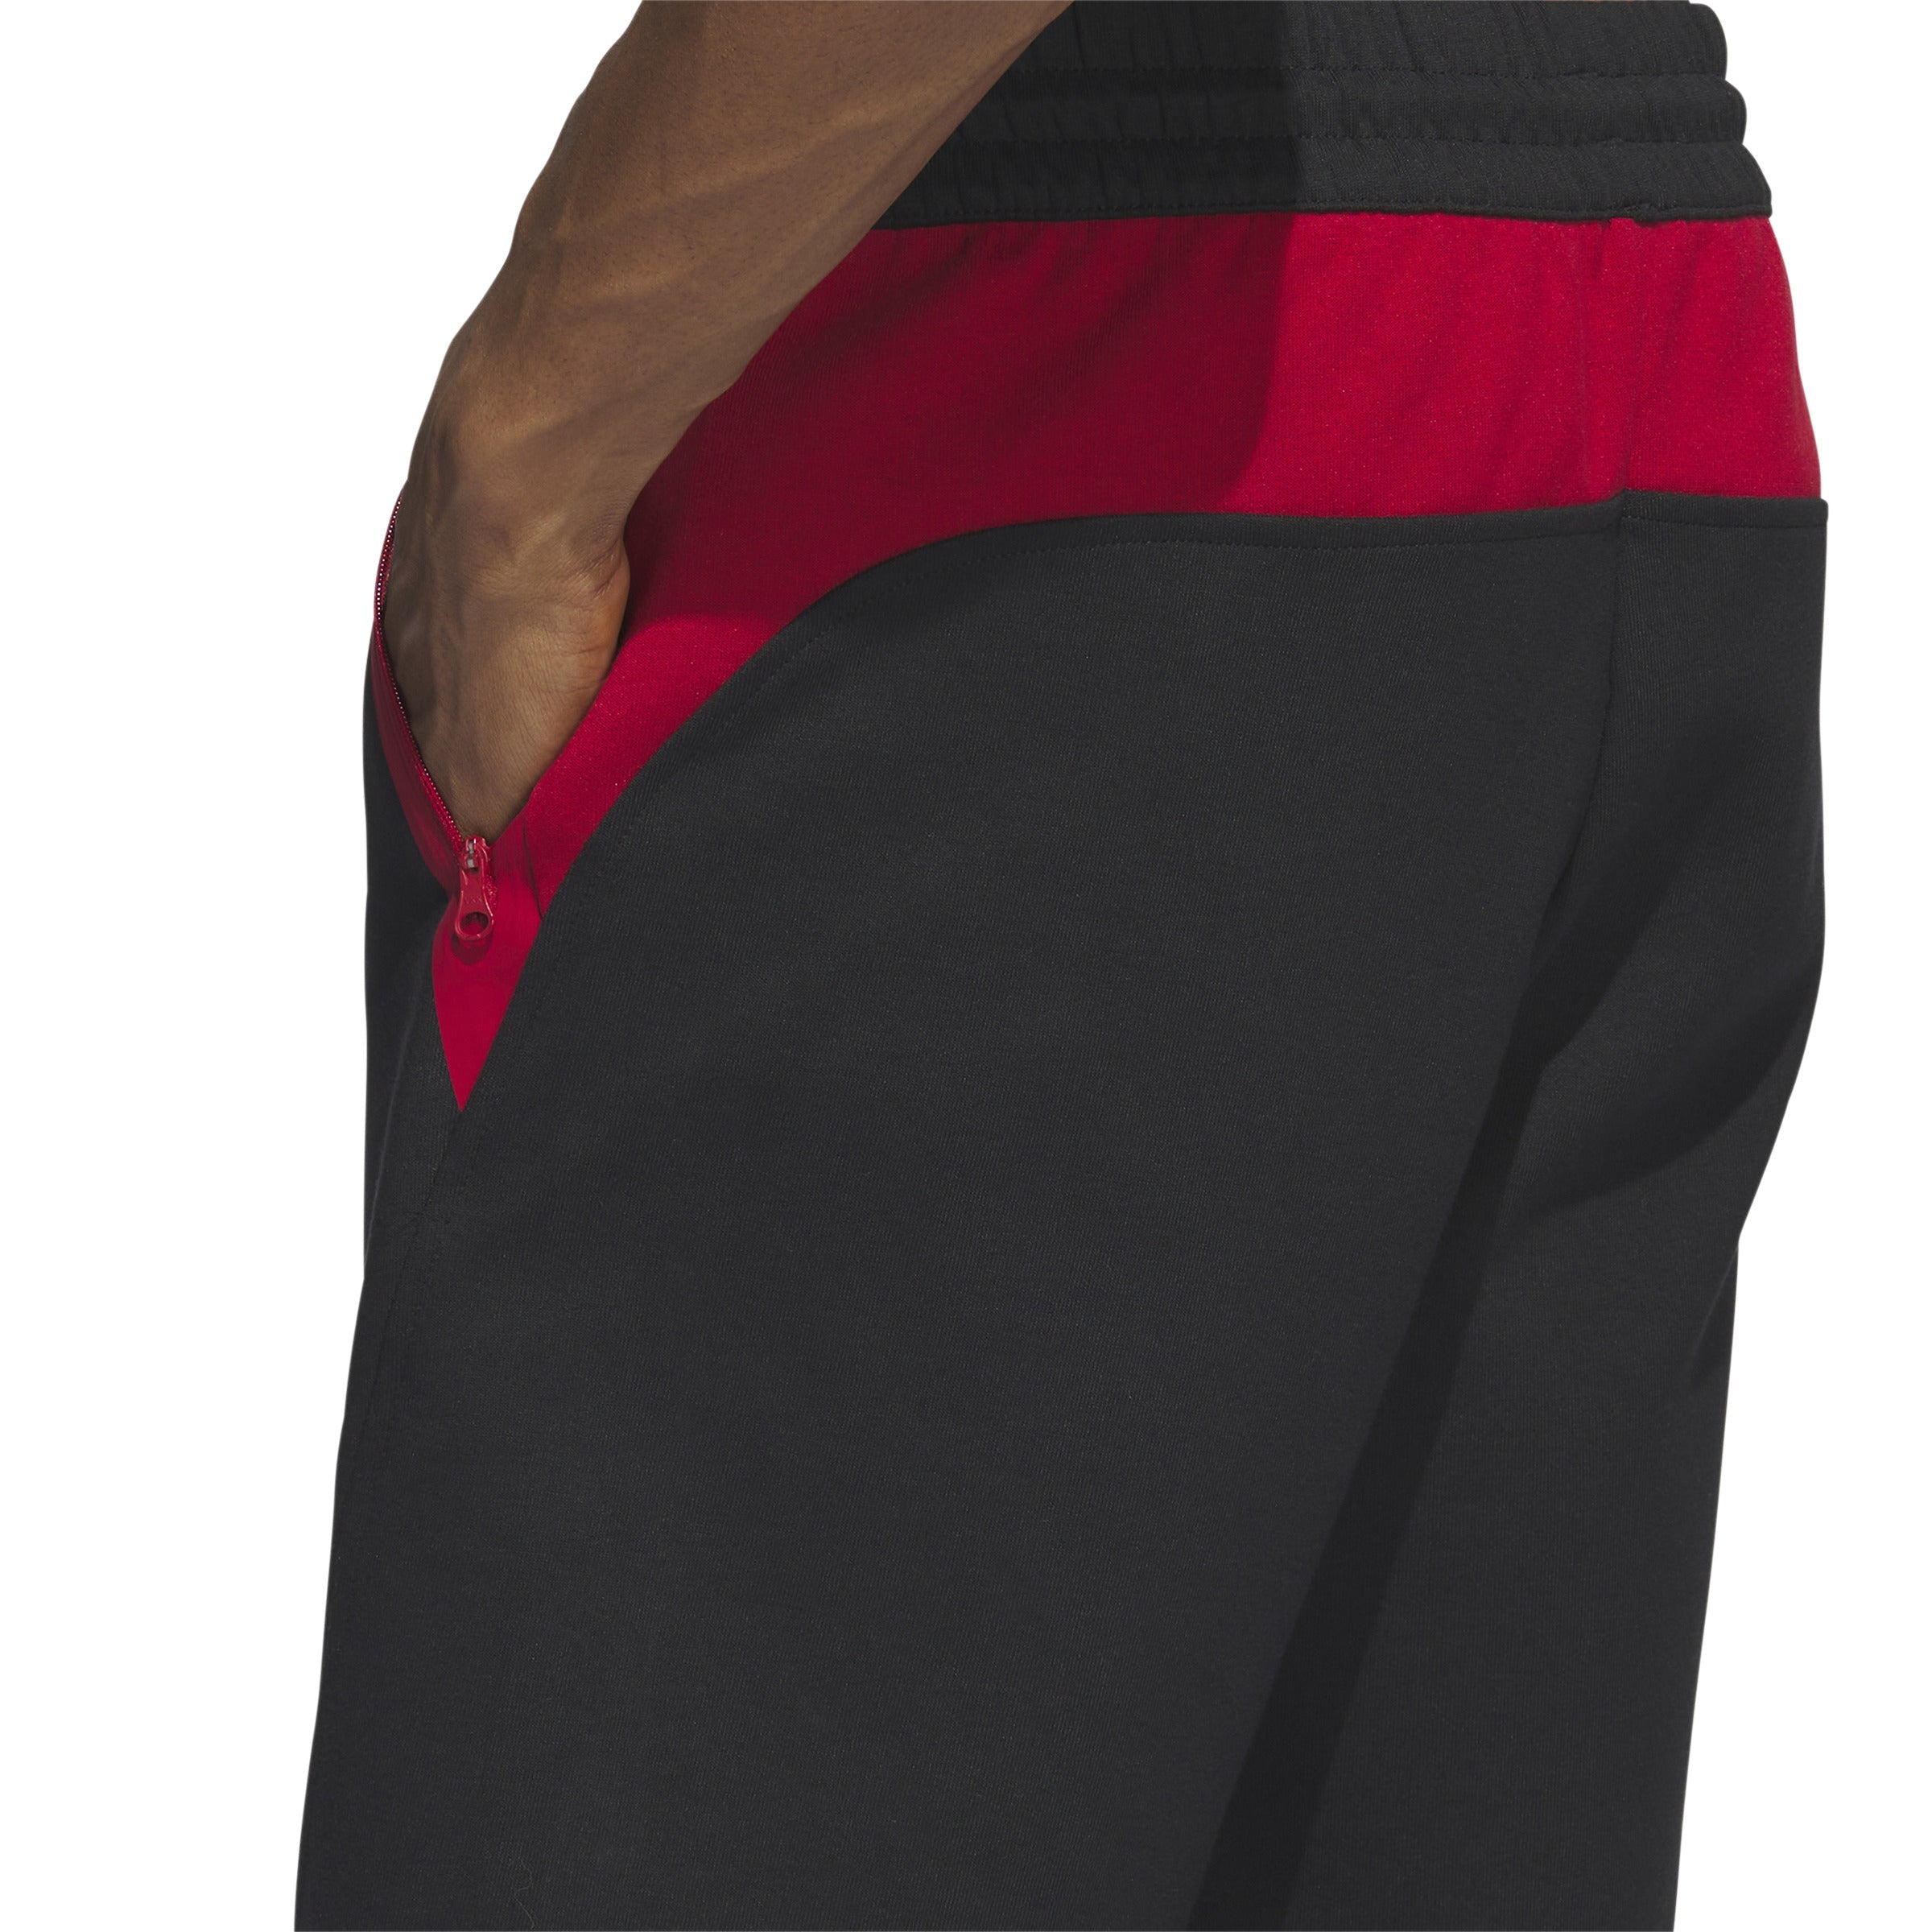 Pantalón corto adidas Atlanta United negro